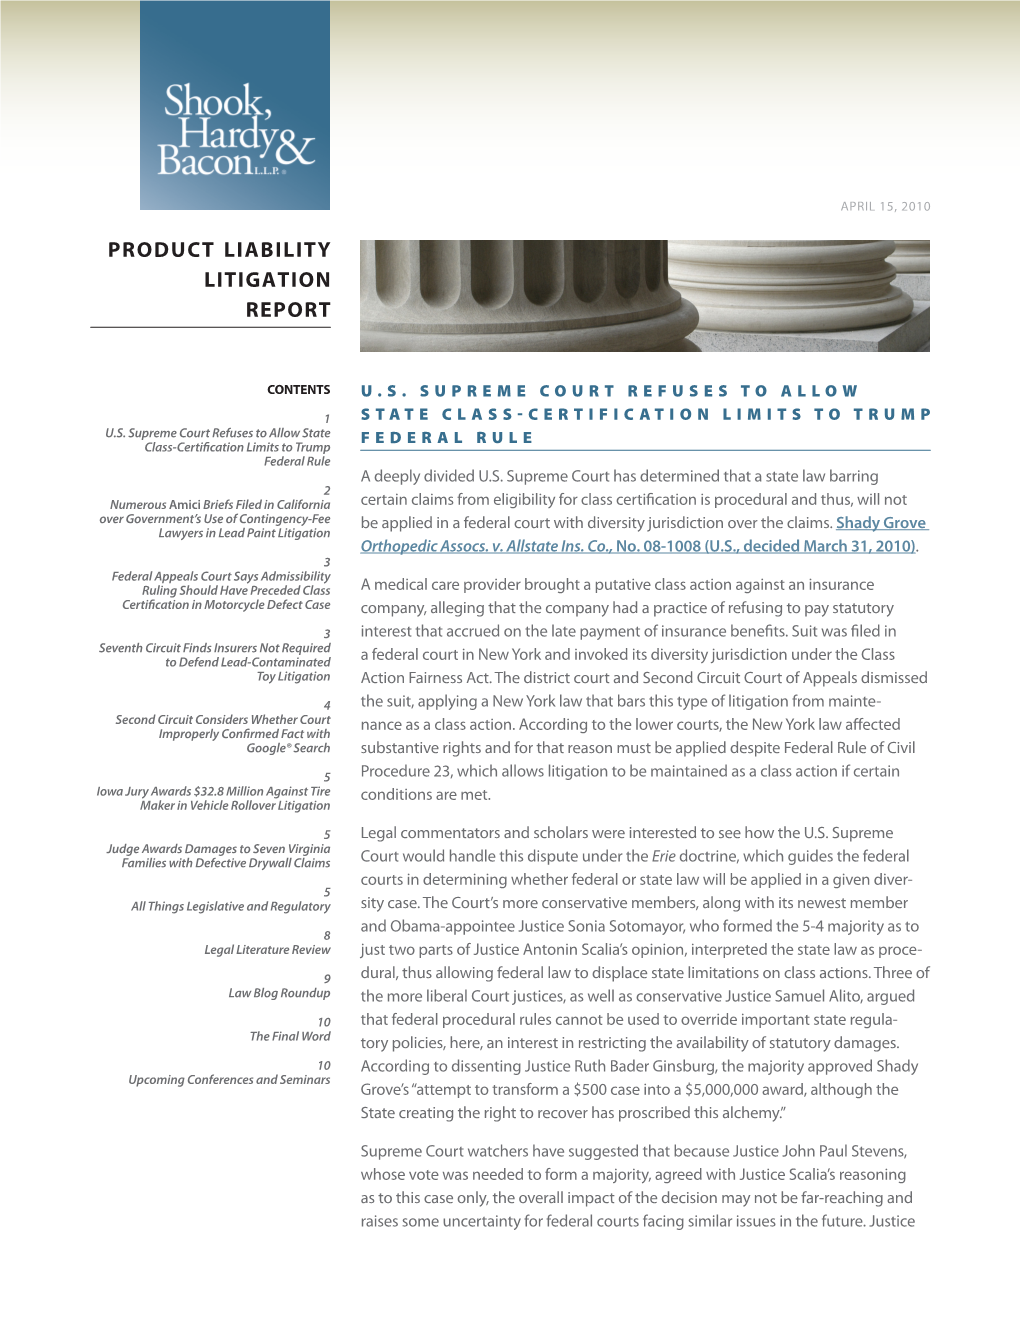 Product Liability Litigation Report